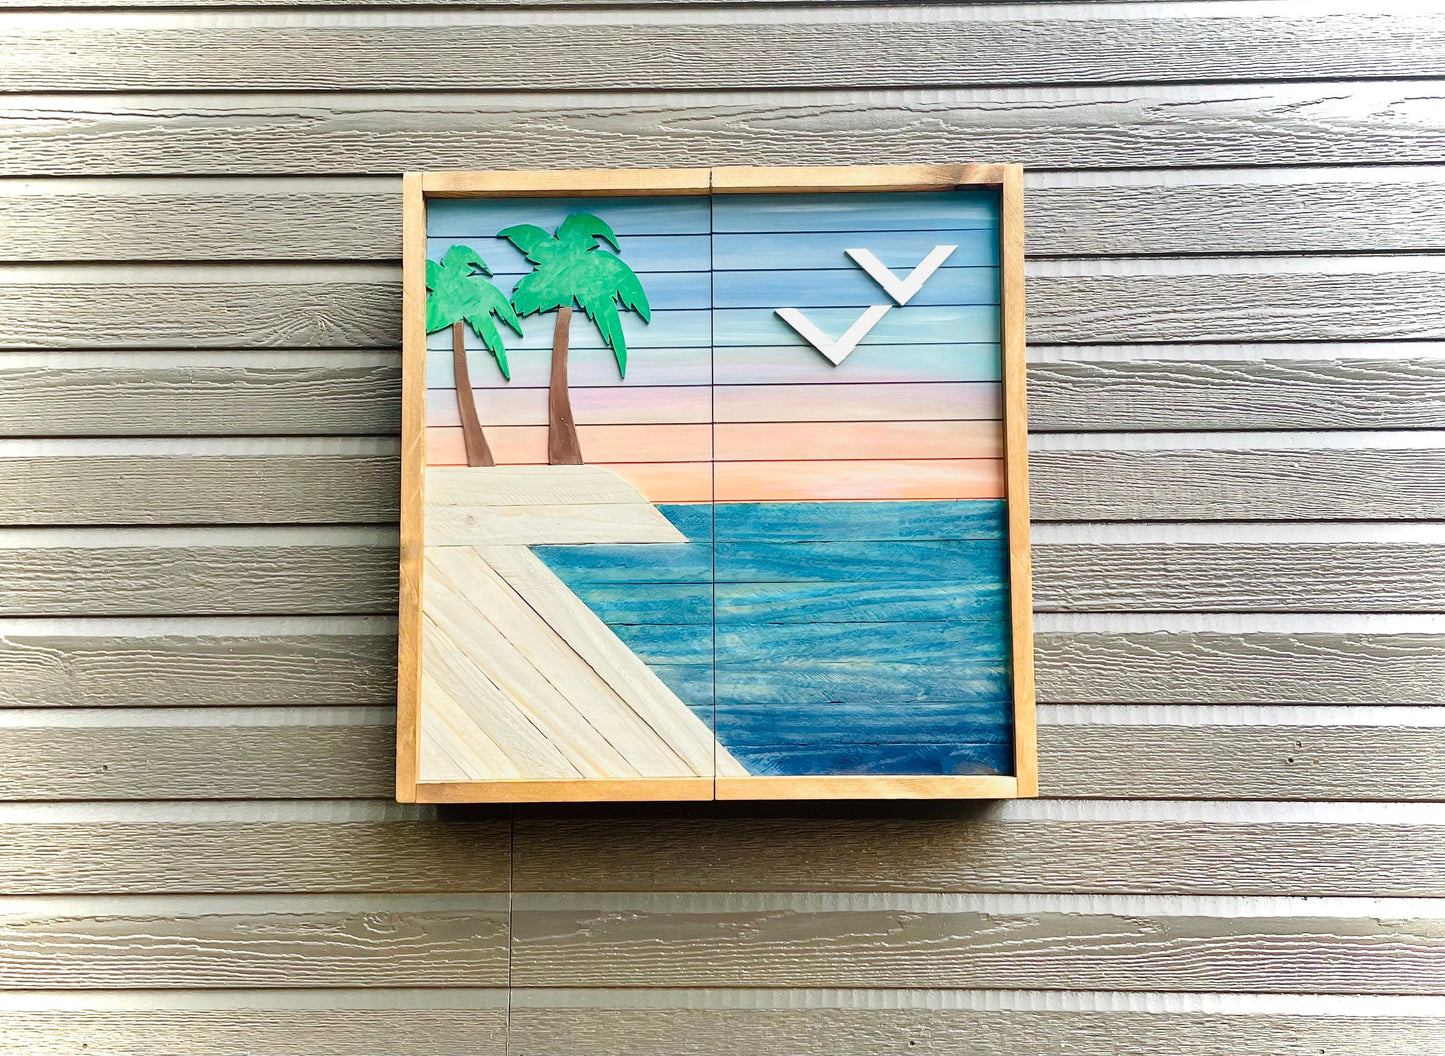 Rustic Dartboard Cabinet 24”x24” - Rustic Beach Front-Rustic Cabinet - Gameroom Art - Wall Decor - Rustic Artwork- Beach Art